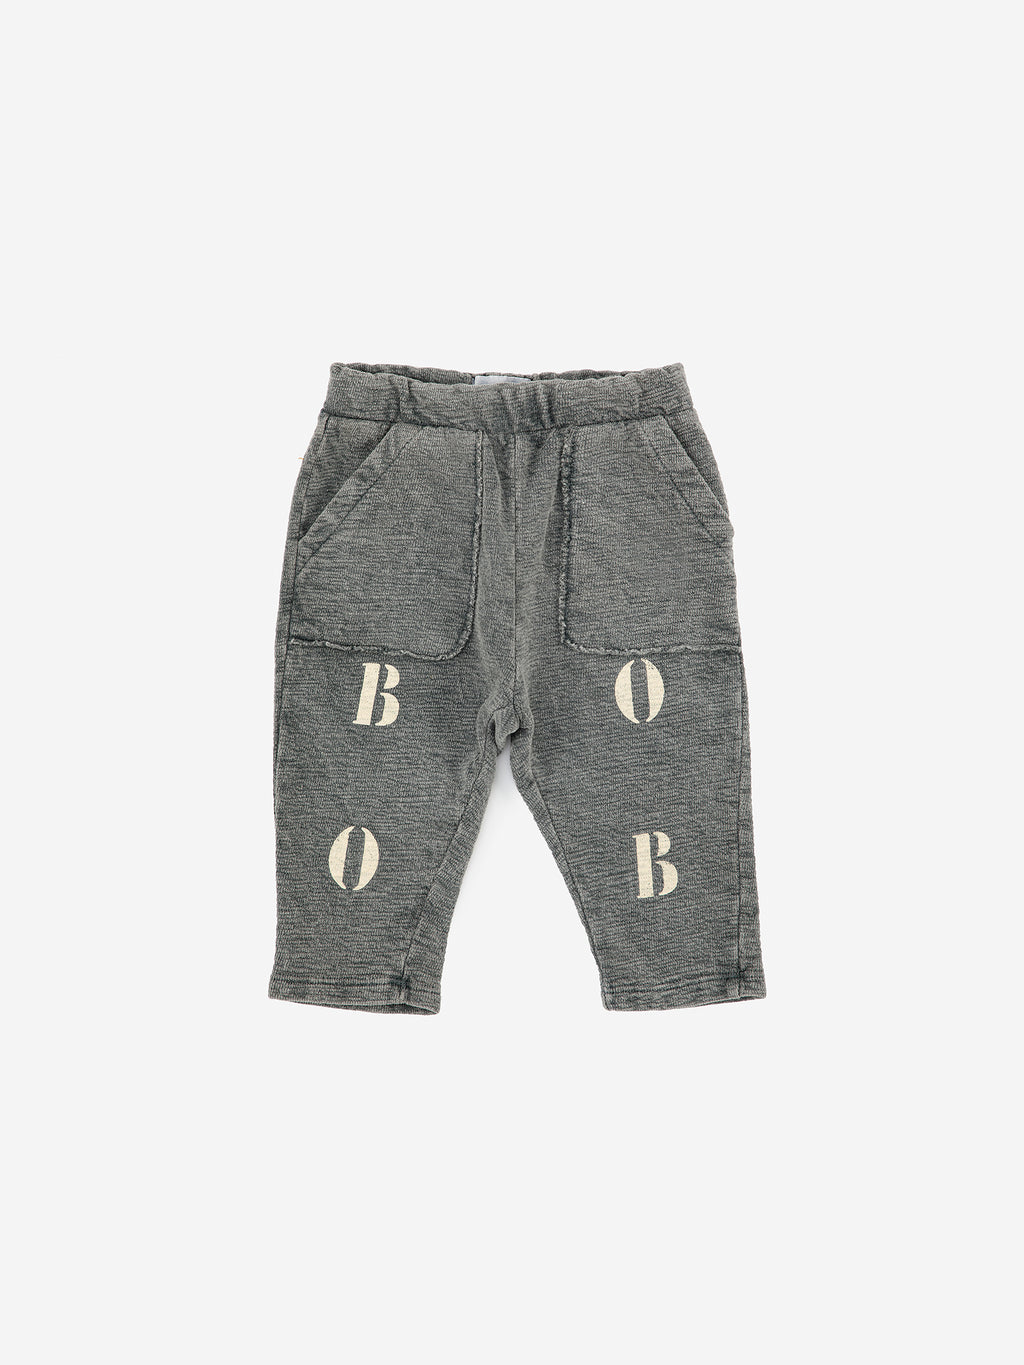 Bobo Choses Baby Jogging Pants - Bobo